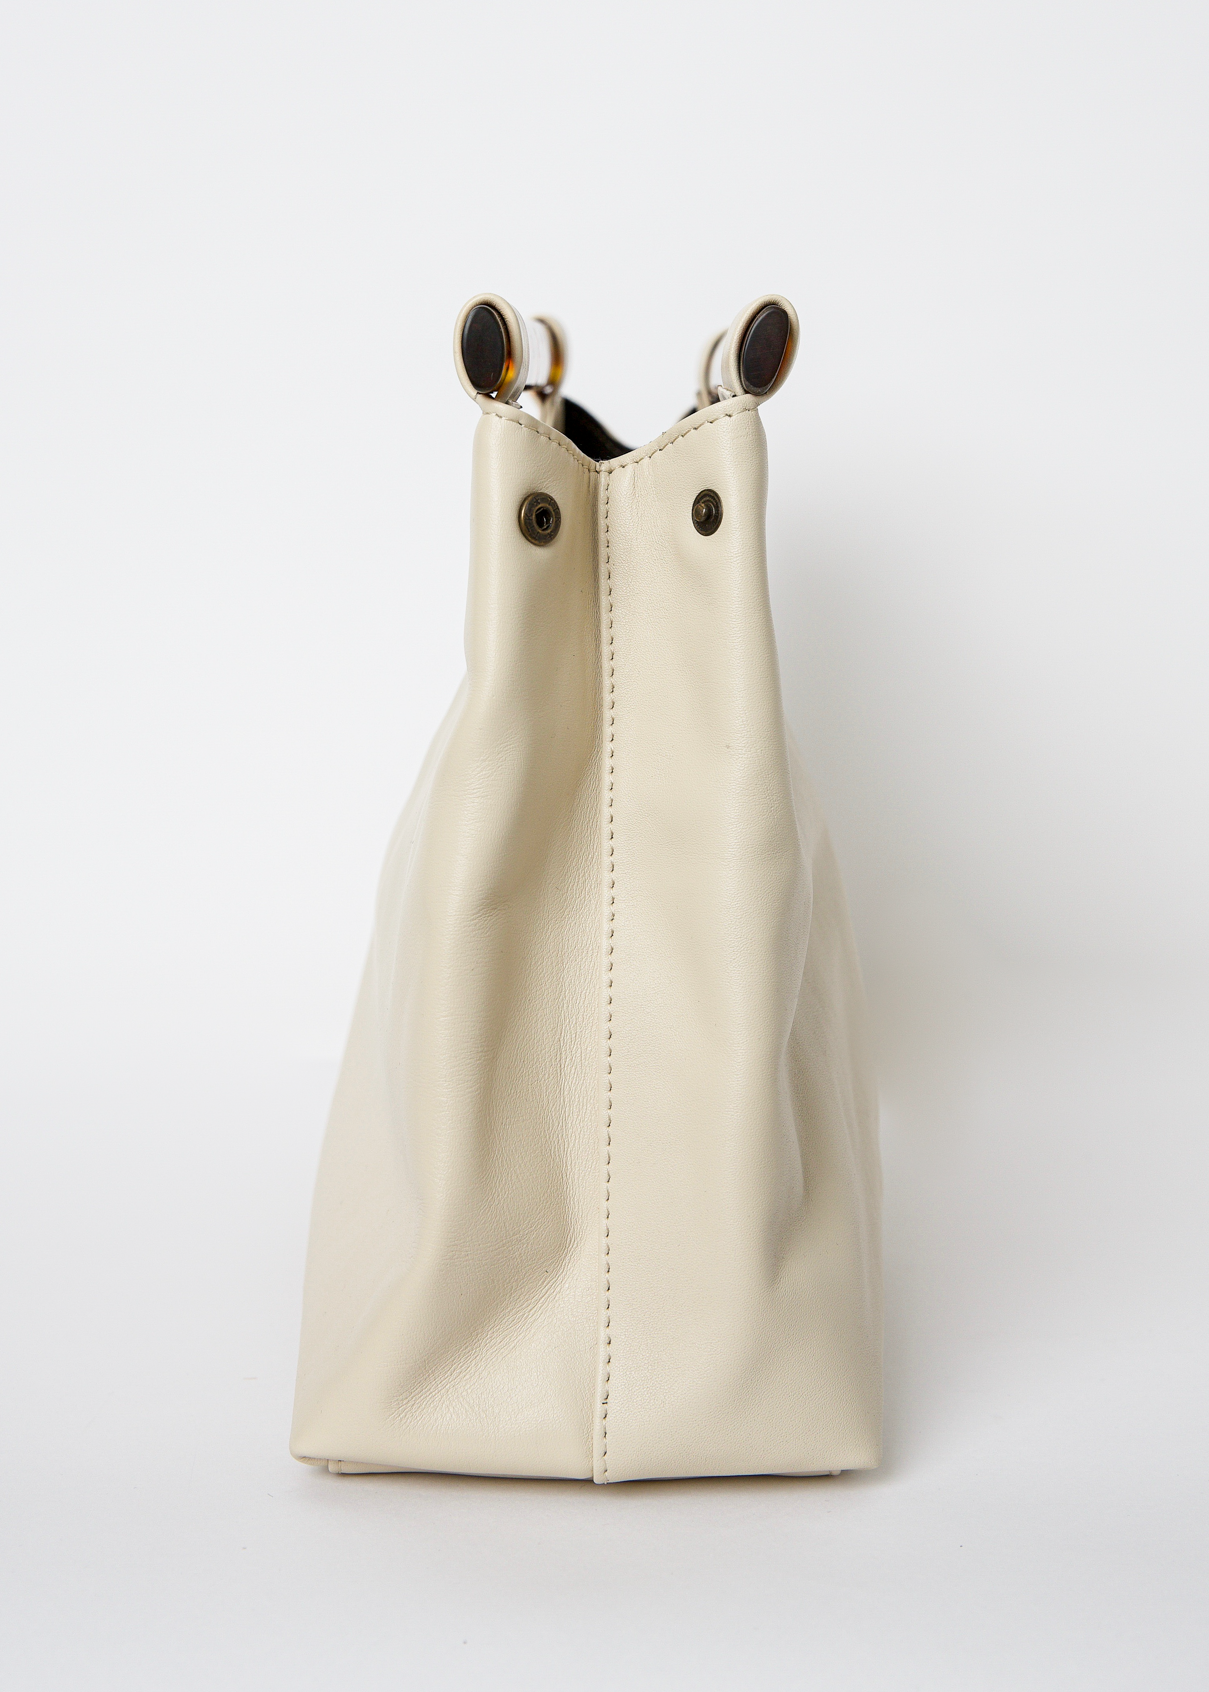 White nappa leather Eloise handbag / tote